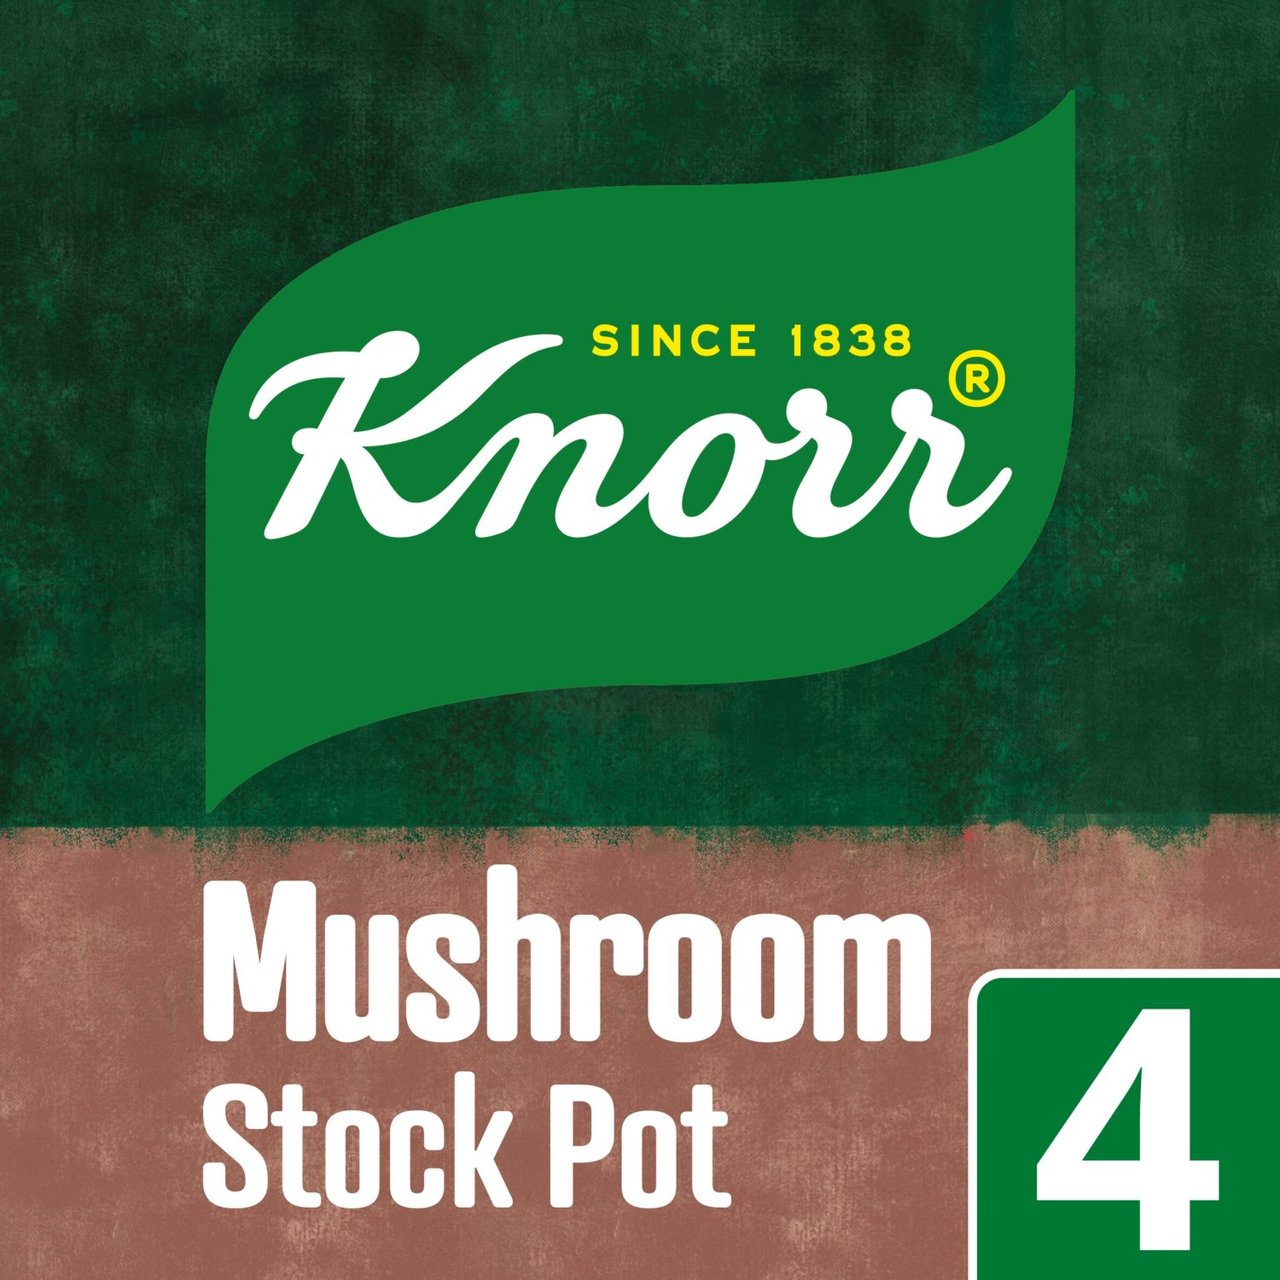 Knorr Logo mascot Vintage Pin Badges | eBay